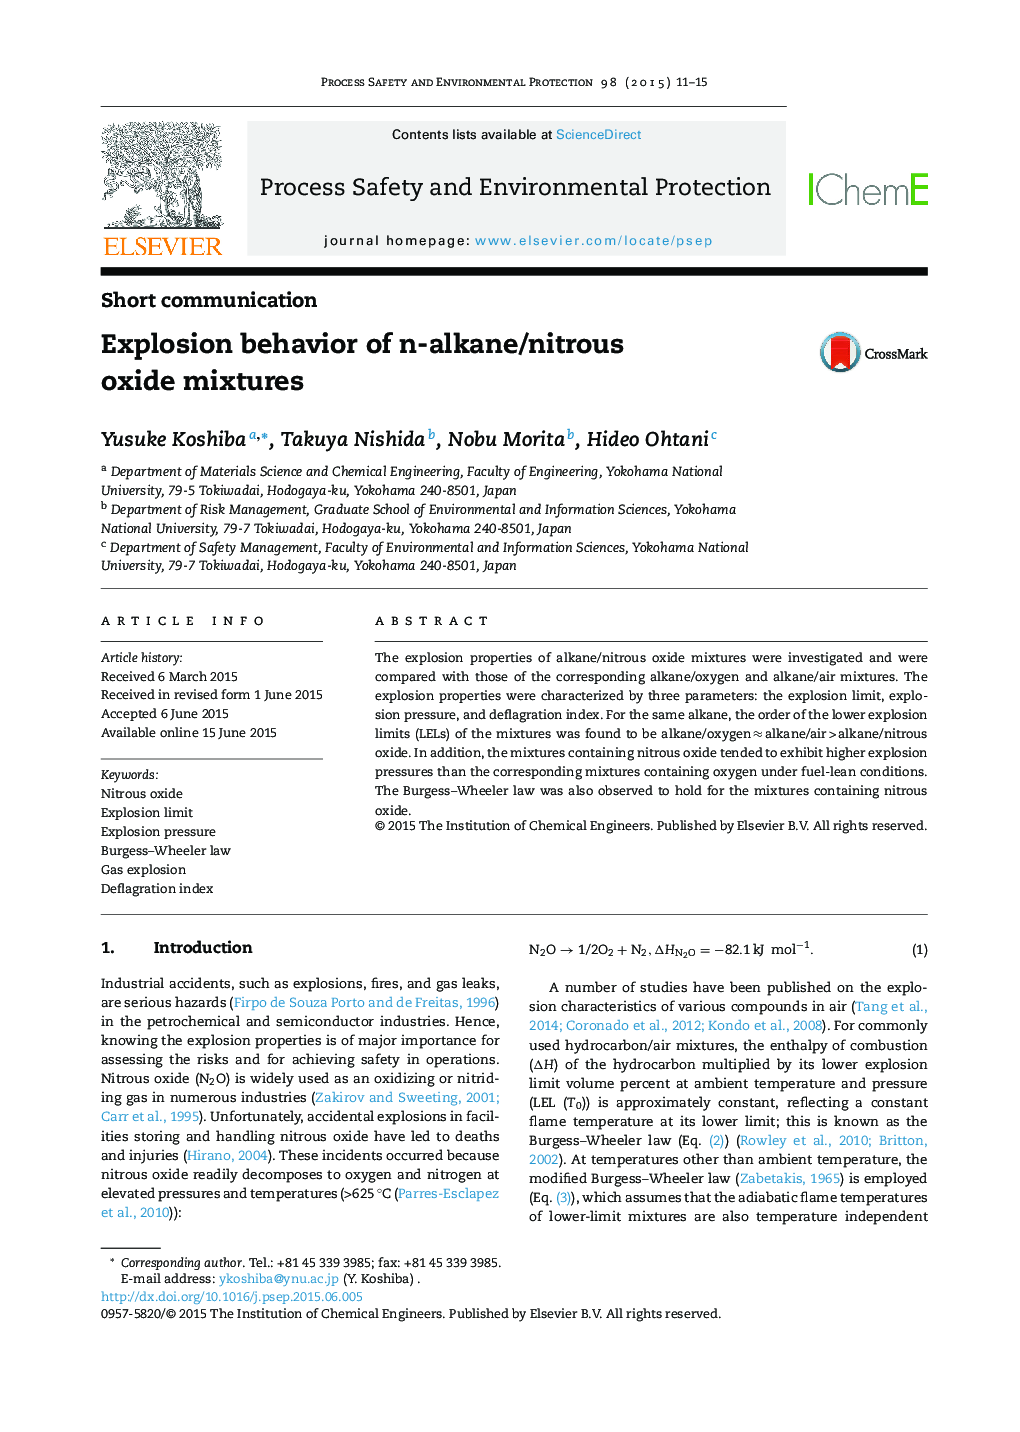 Explosion behavior of n-alkane/nitrous oxide mixtures